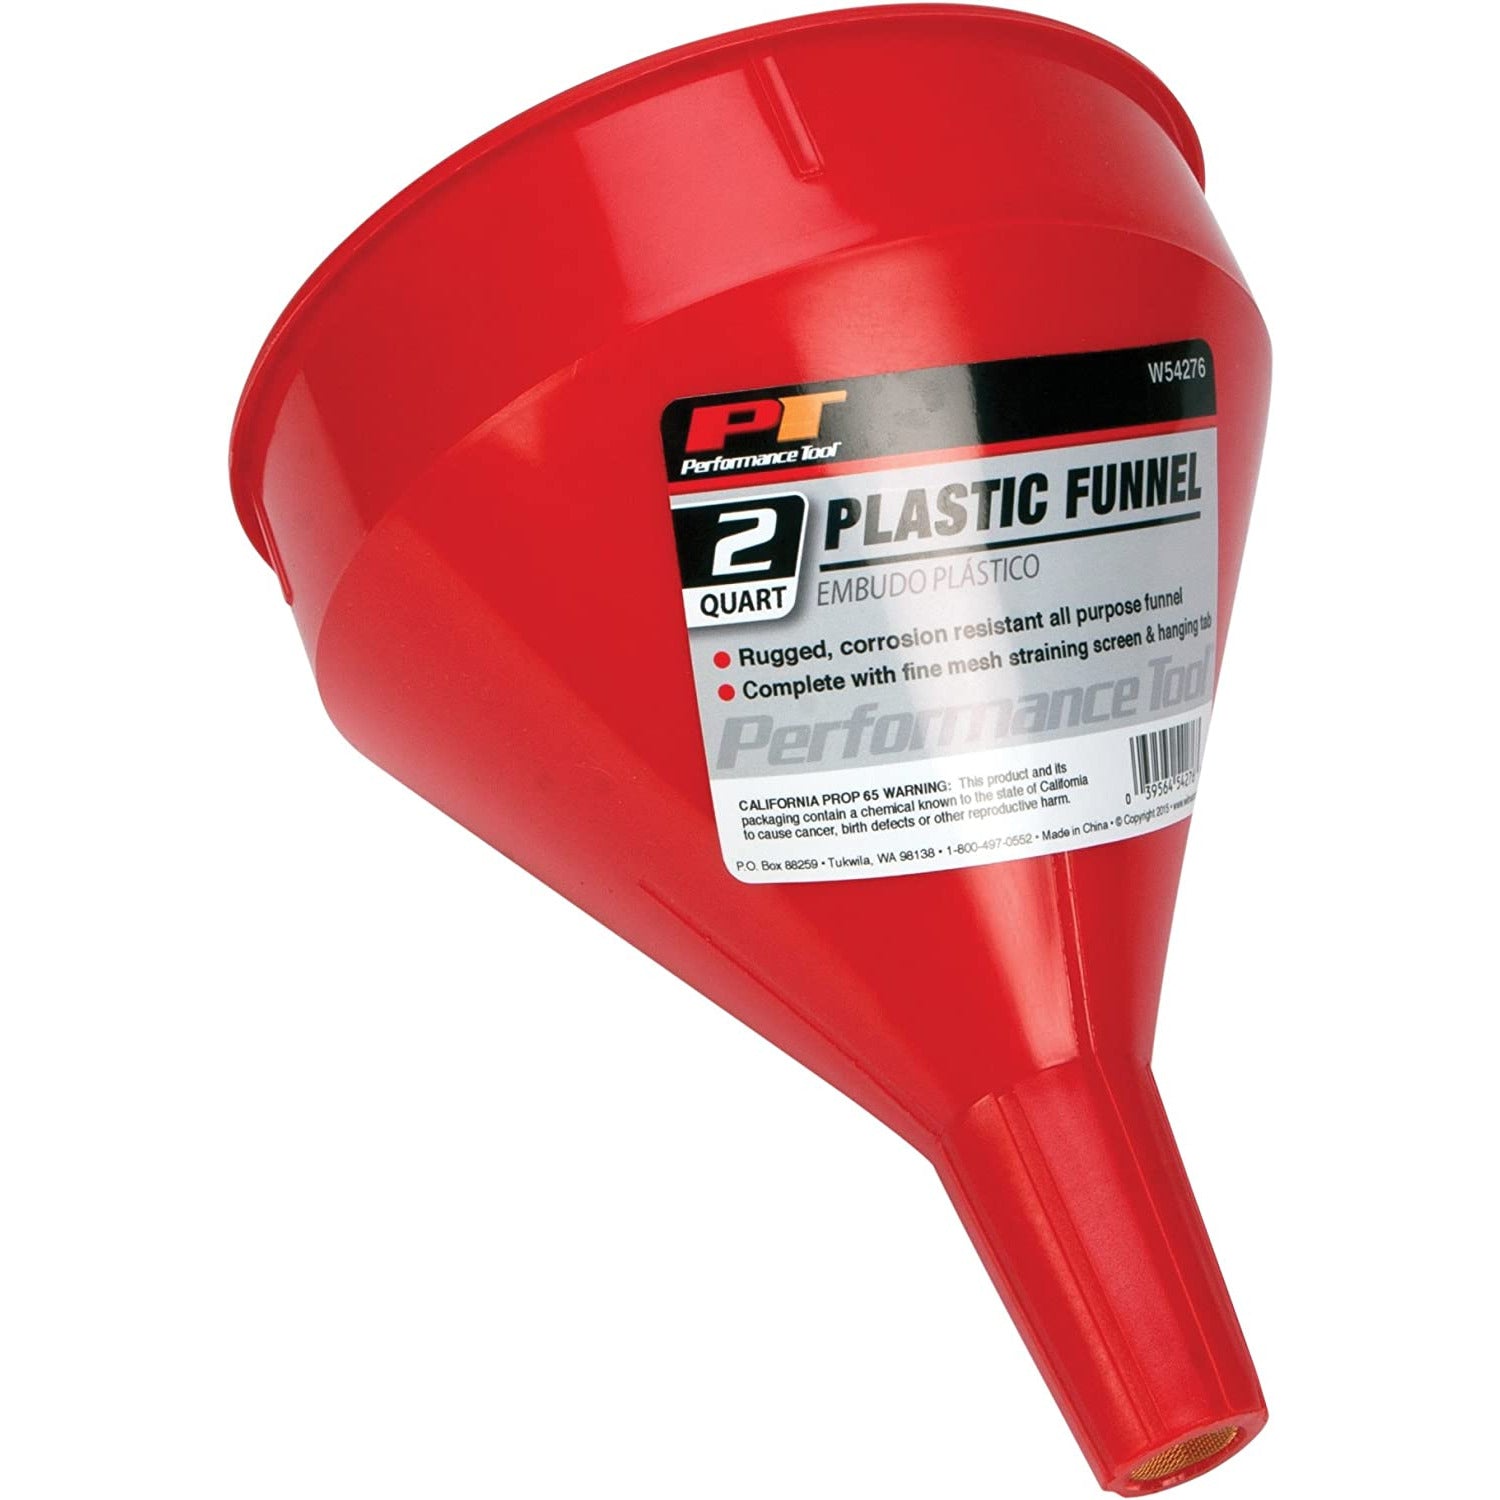 ET WILW54276 Performance Tool Plastic Funnel (2 QT)